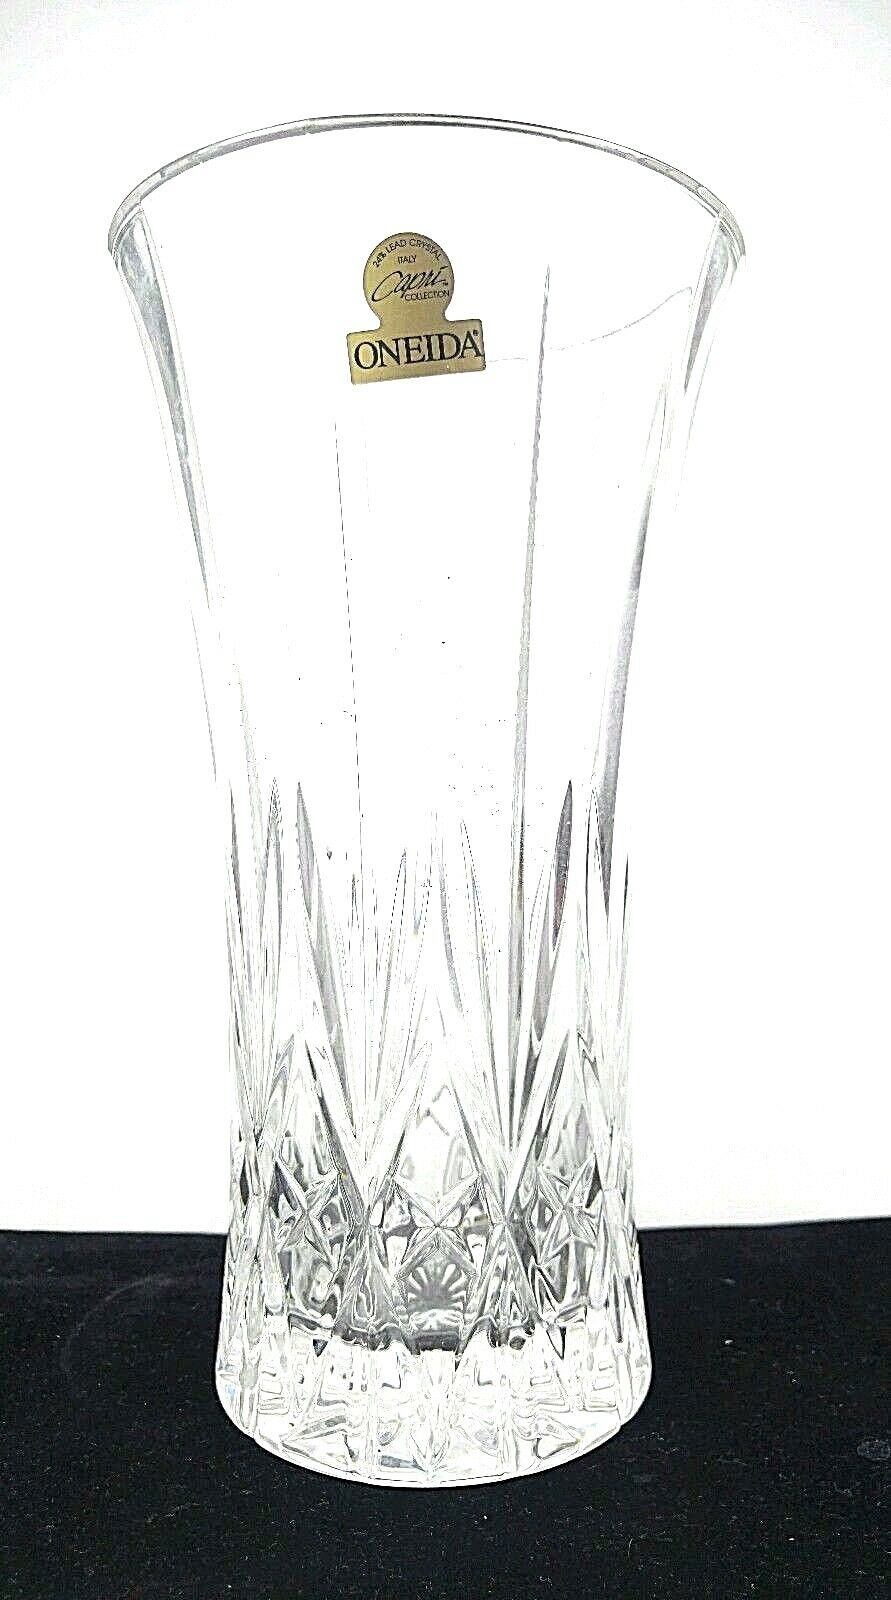 24% Lead Crystal Italy Oneida Capri Collection Glass Diamond Vase 9.75"